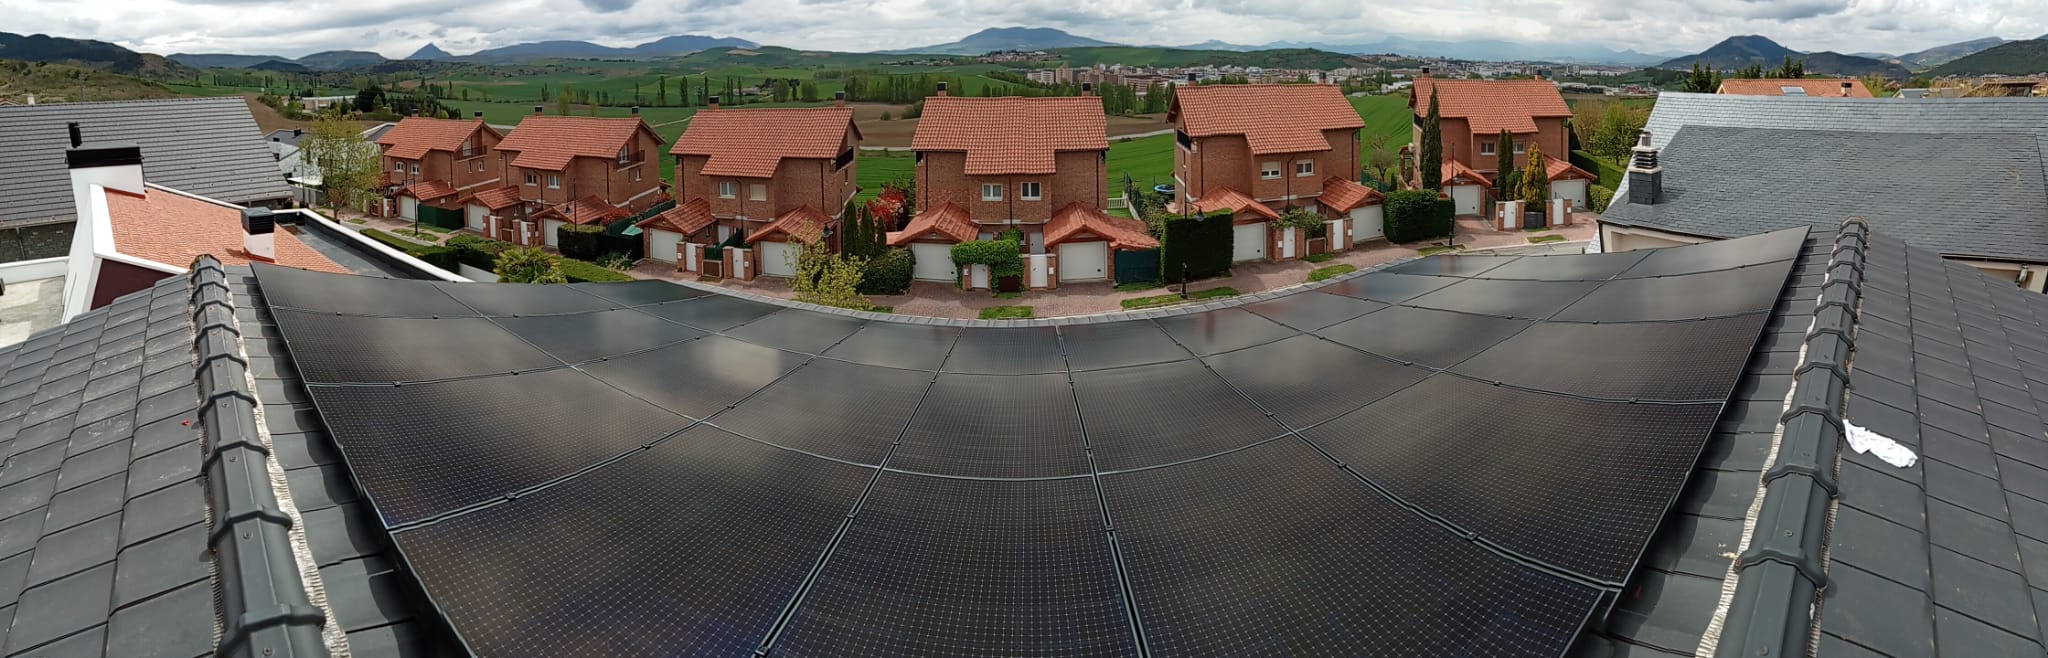 Instalación de paneles solares en Gorraiz